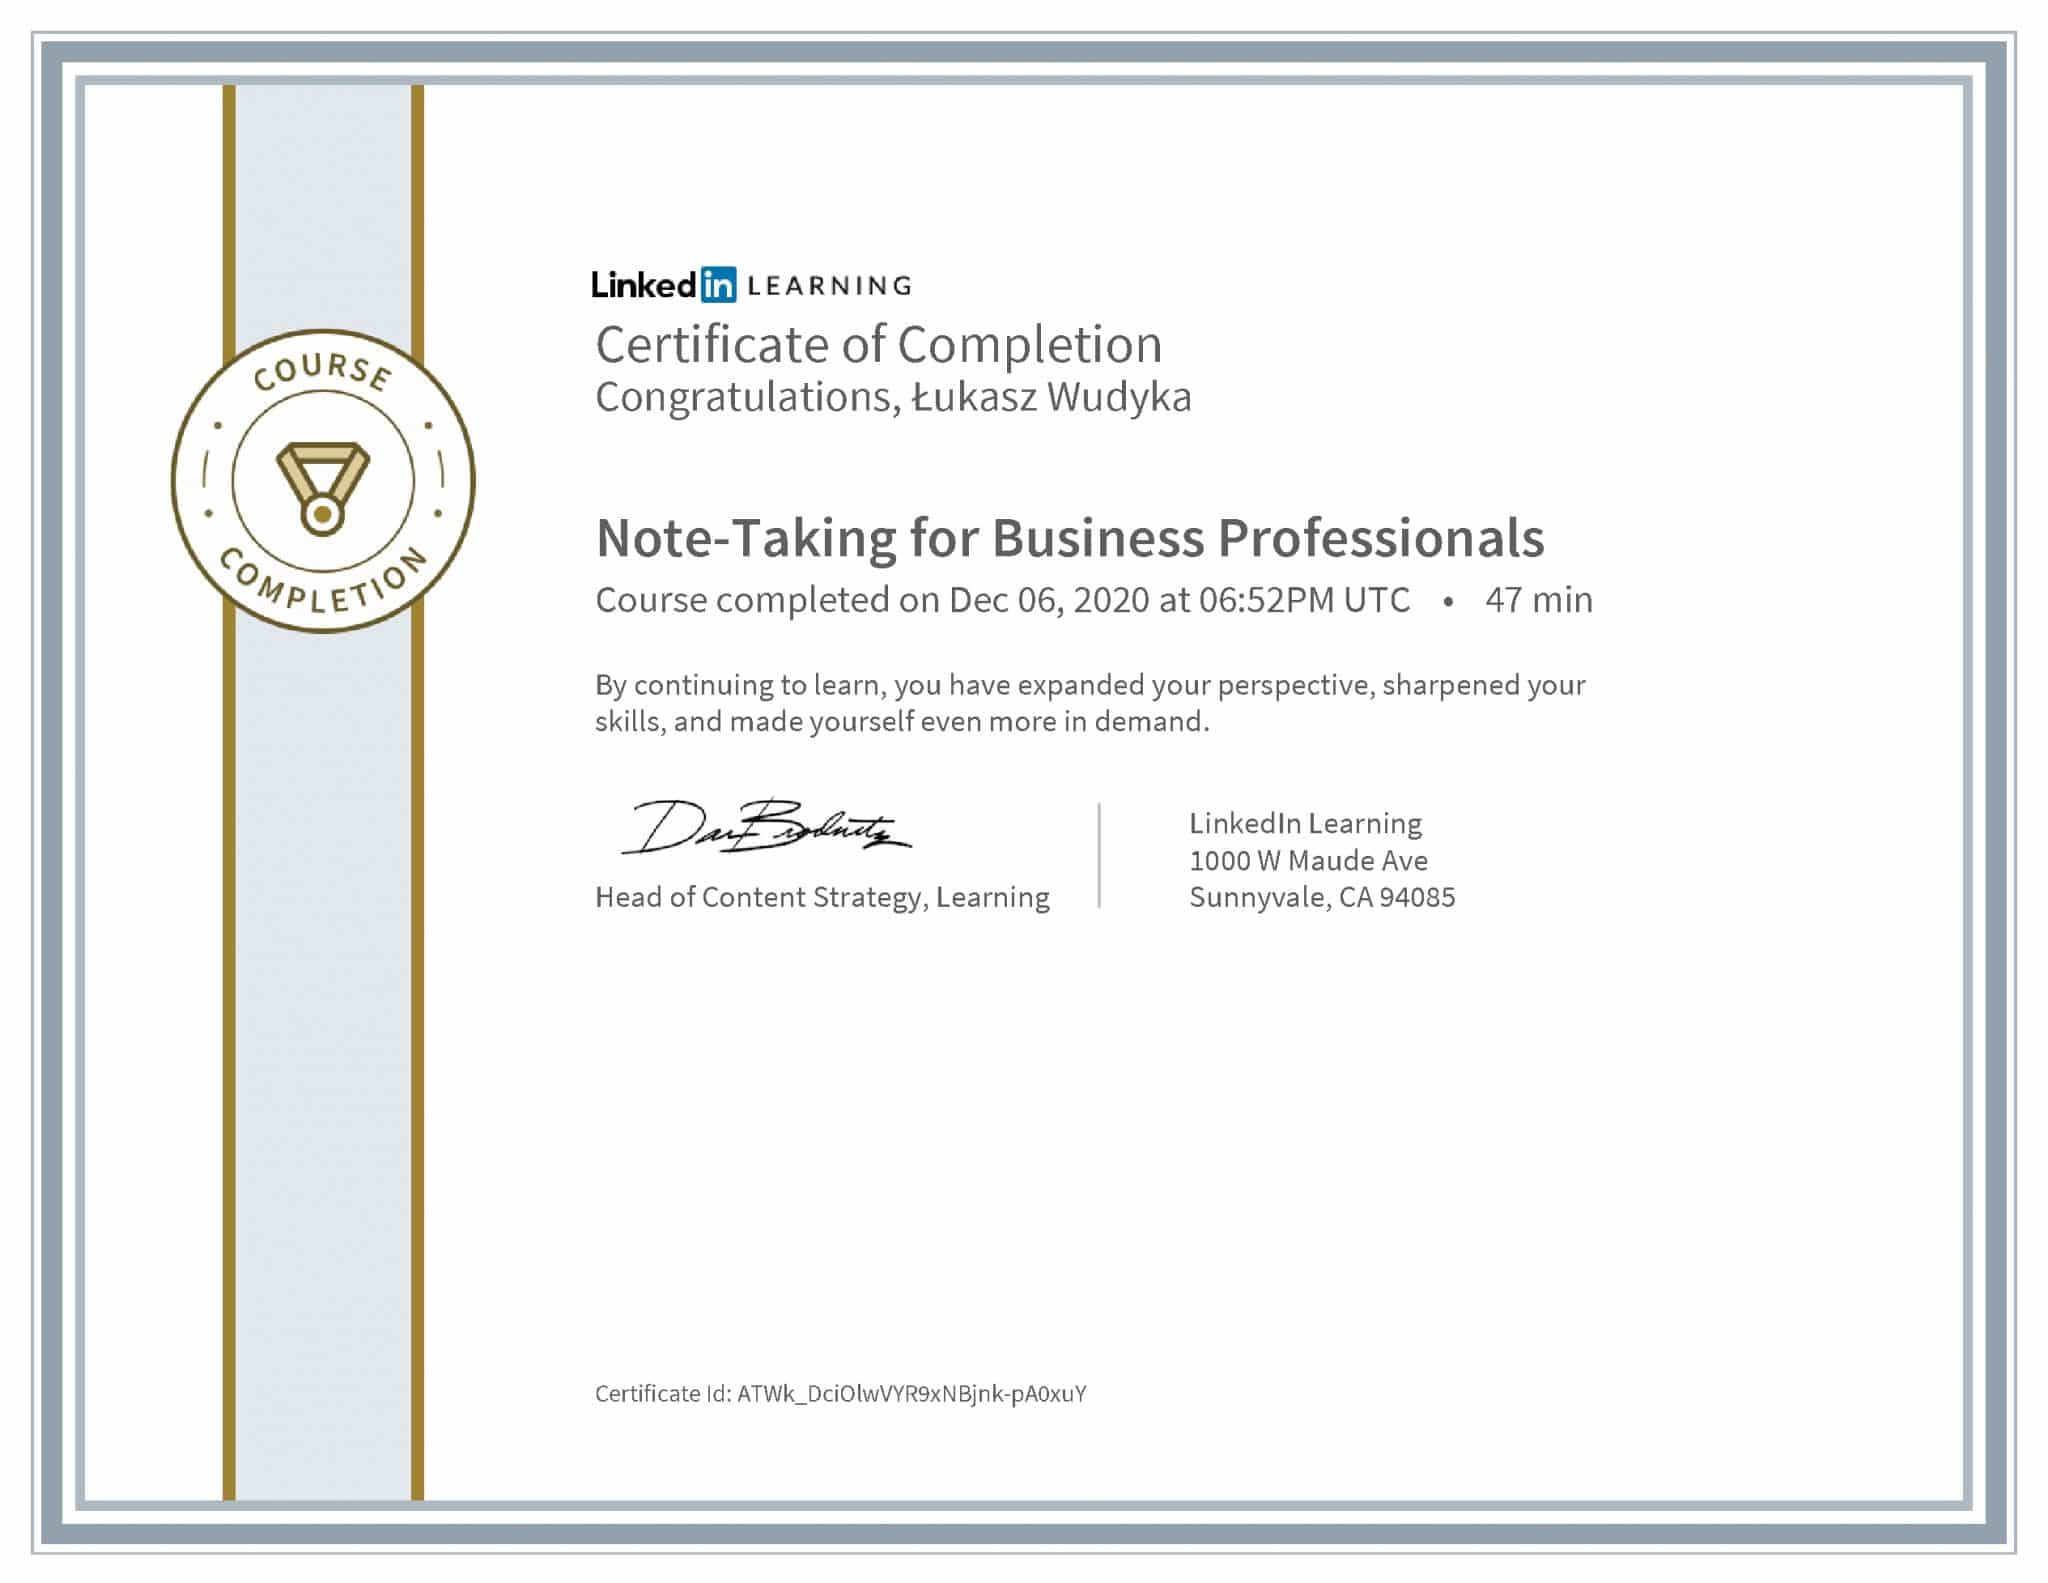 Łukasz Wudyka certyfikat LinkedIn Note-Taking for Business Professionals